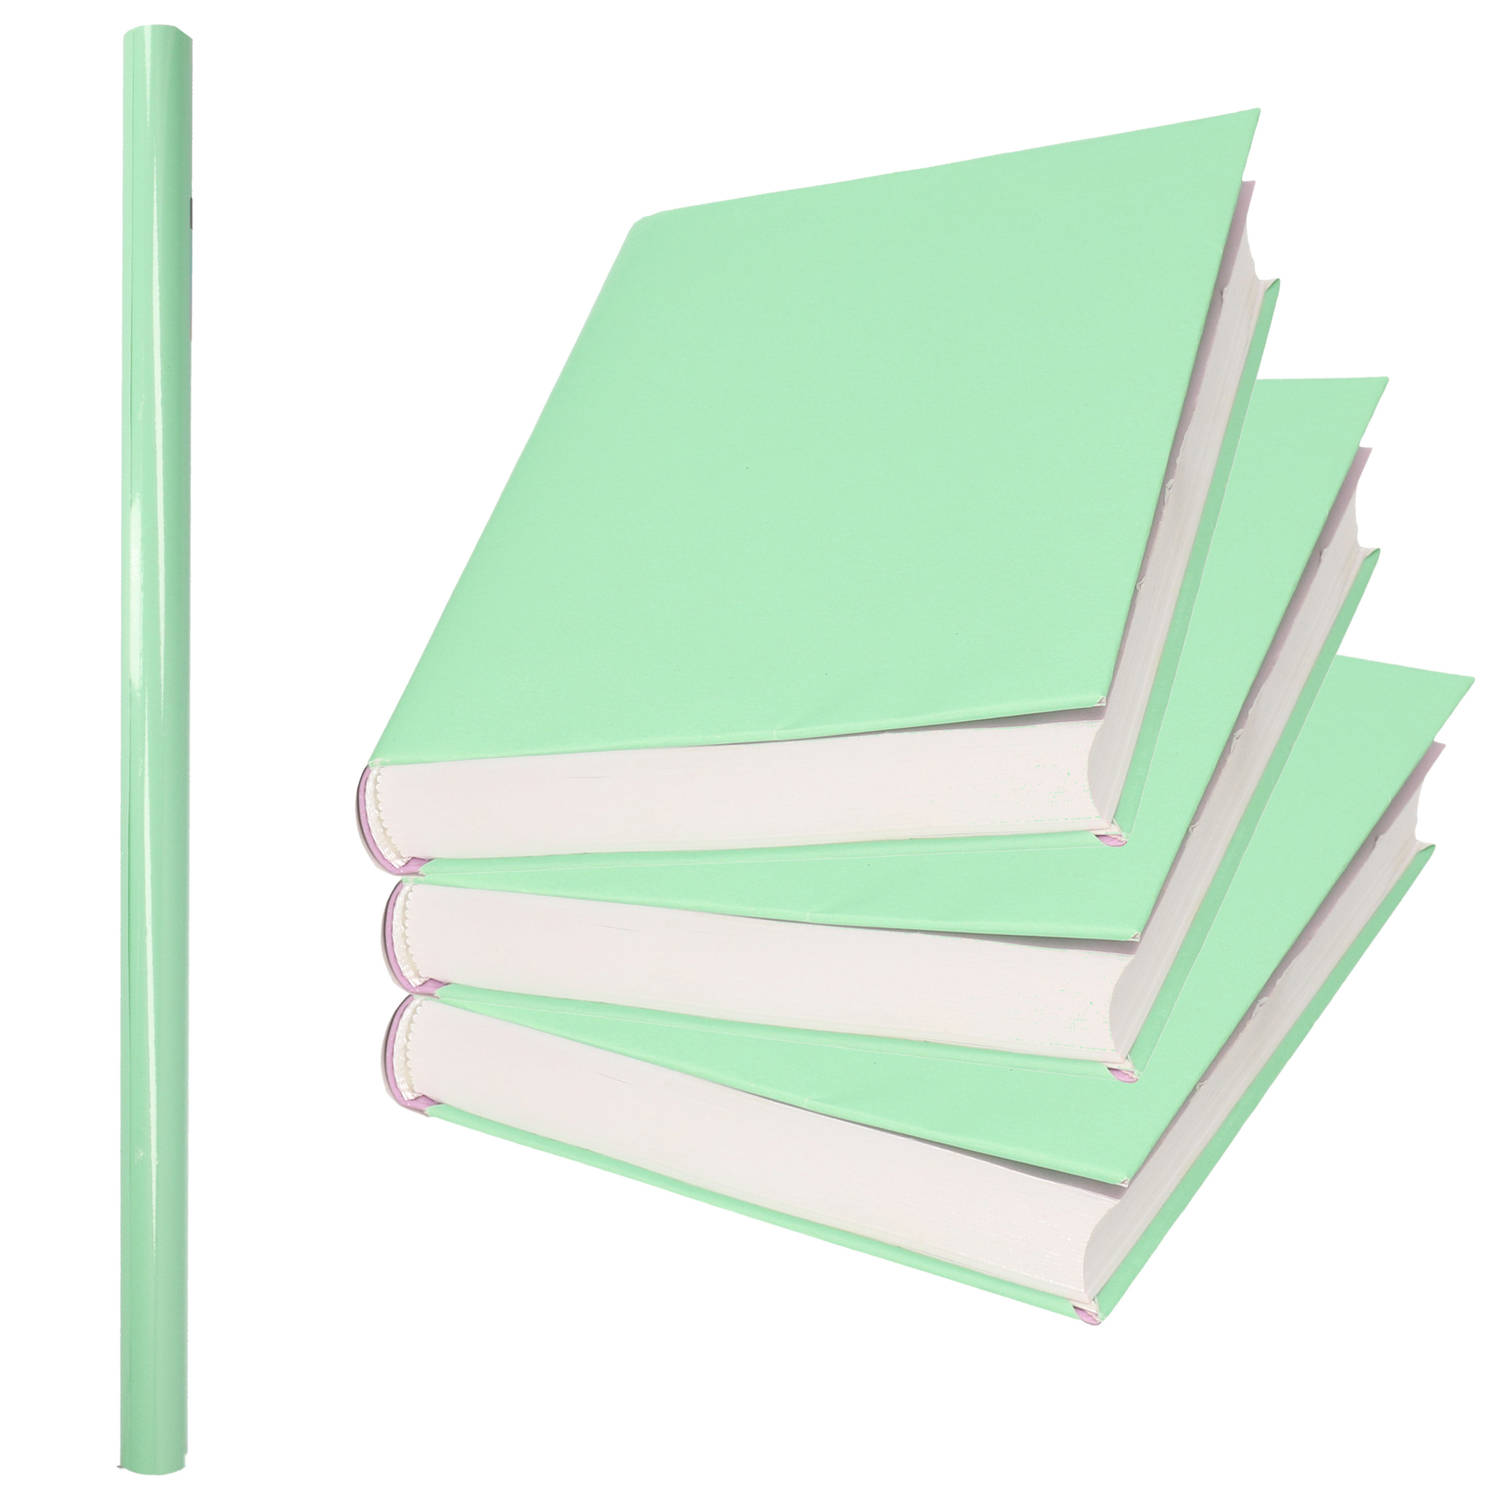 1x Rollen kadopapier-schoolboeken kaftpapier pastel groen 200 x 70 cm Kaftpapier